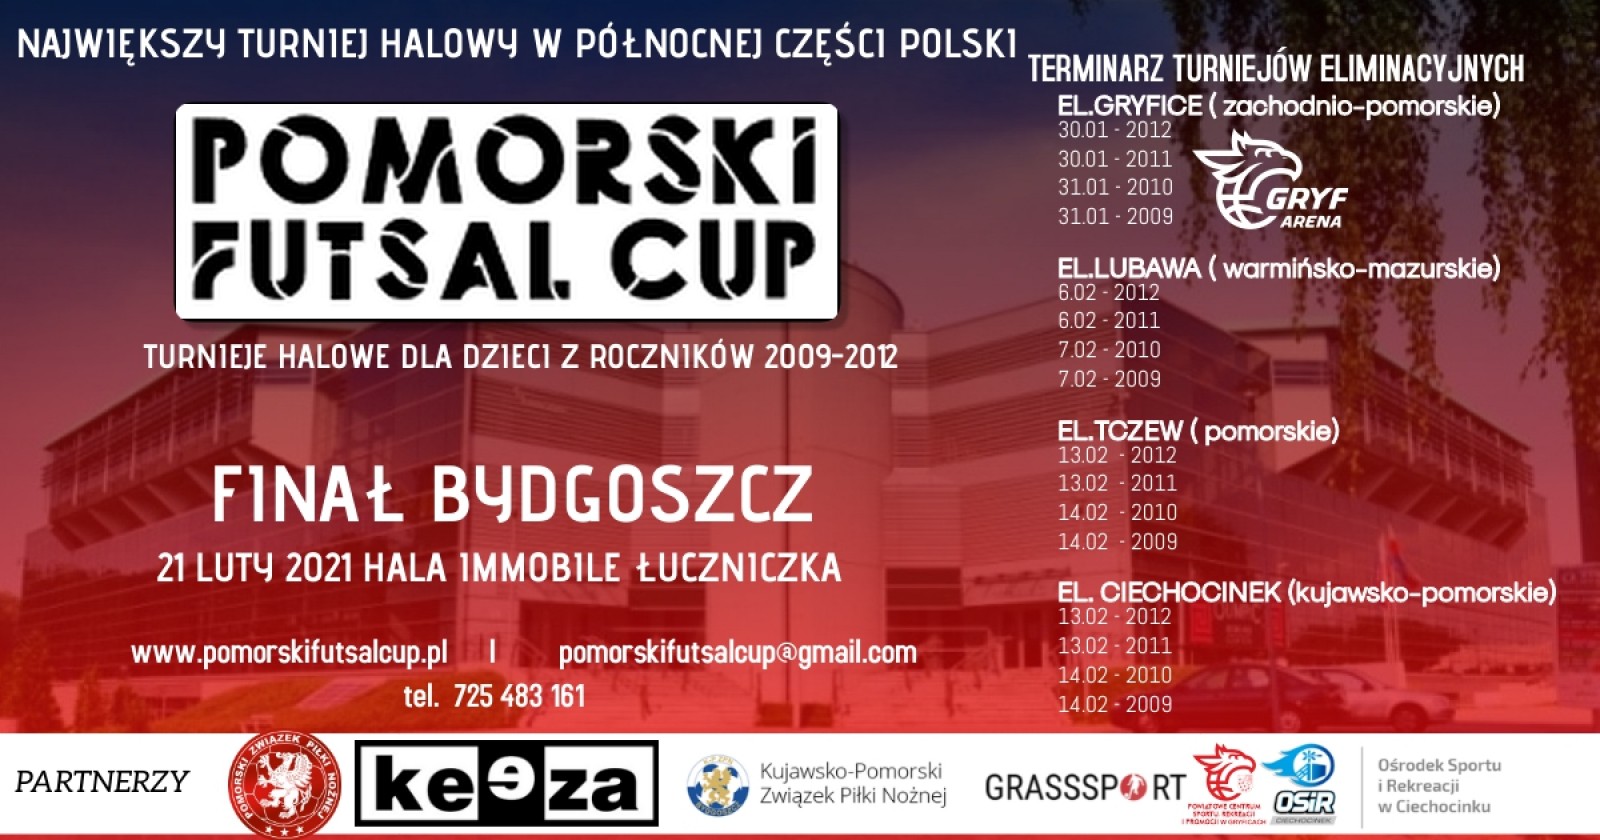 POMORSKI FUTSAL CUP